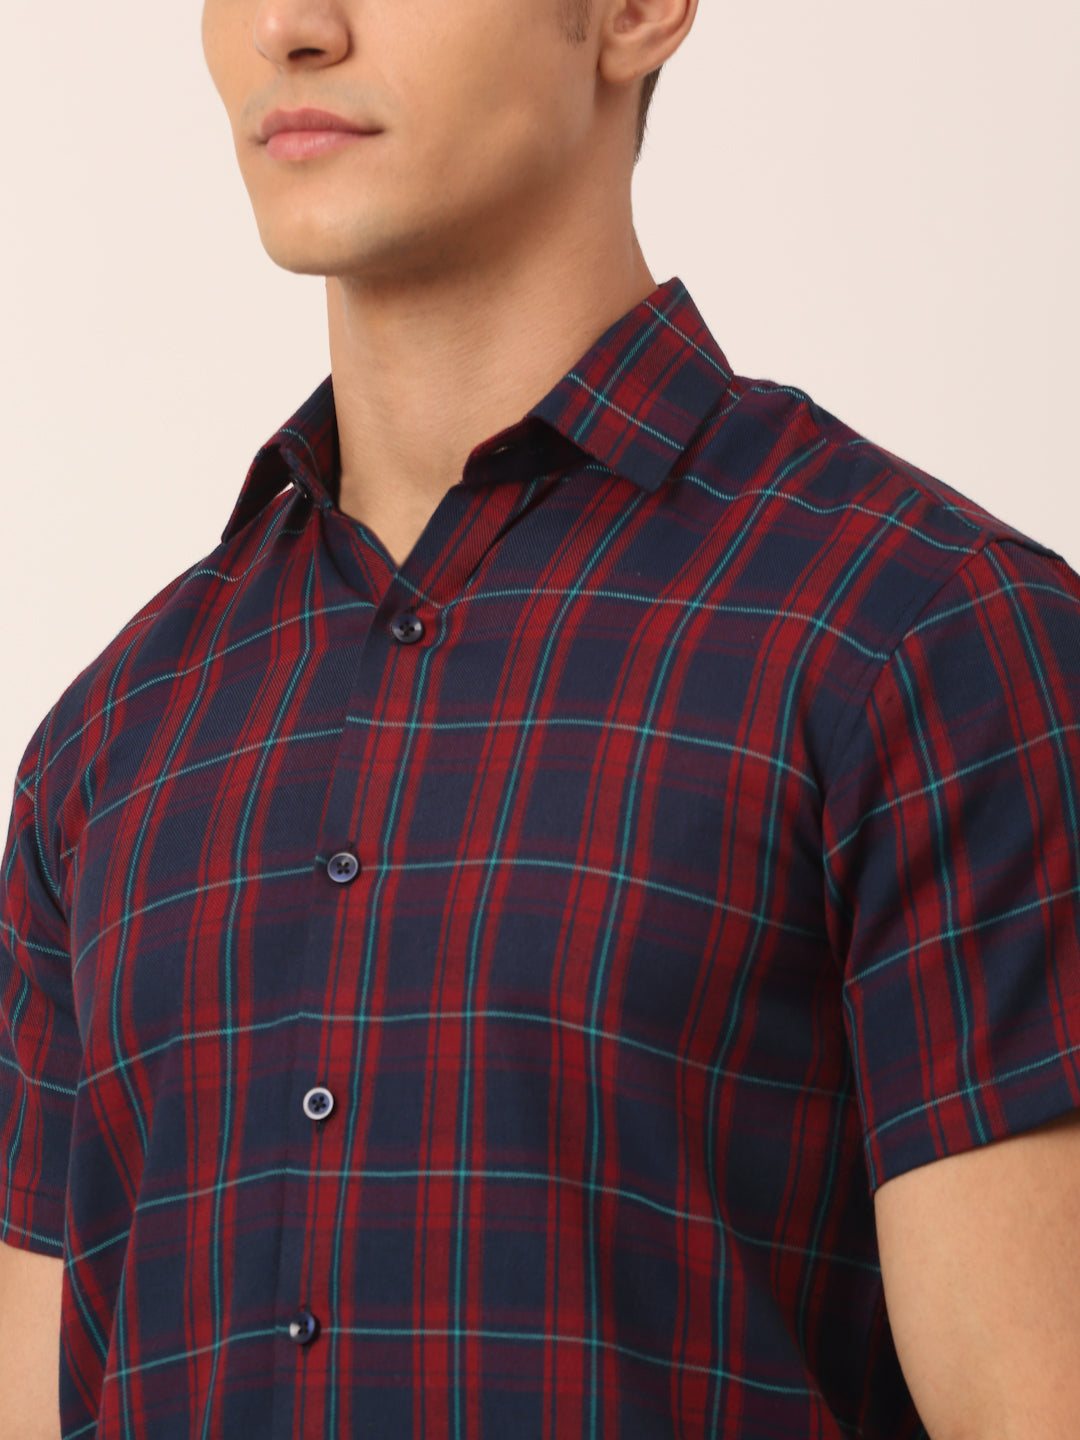 Men's Cotton Checked Half Sleeve Formal Shirts ( SF 818Red-Blue ) - Jainish